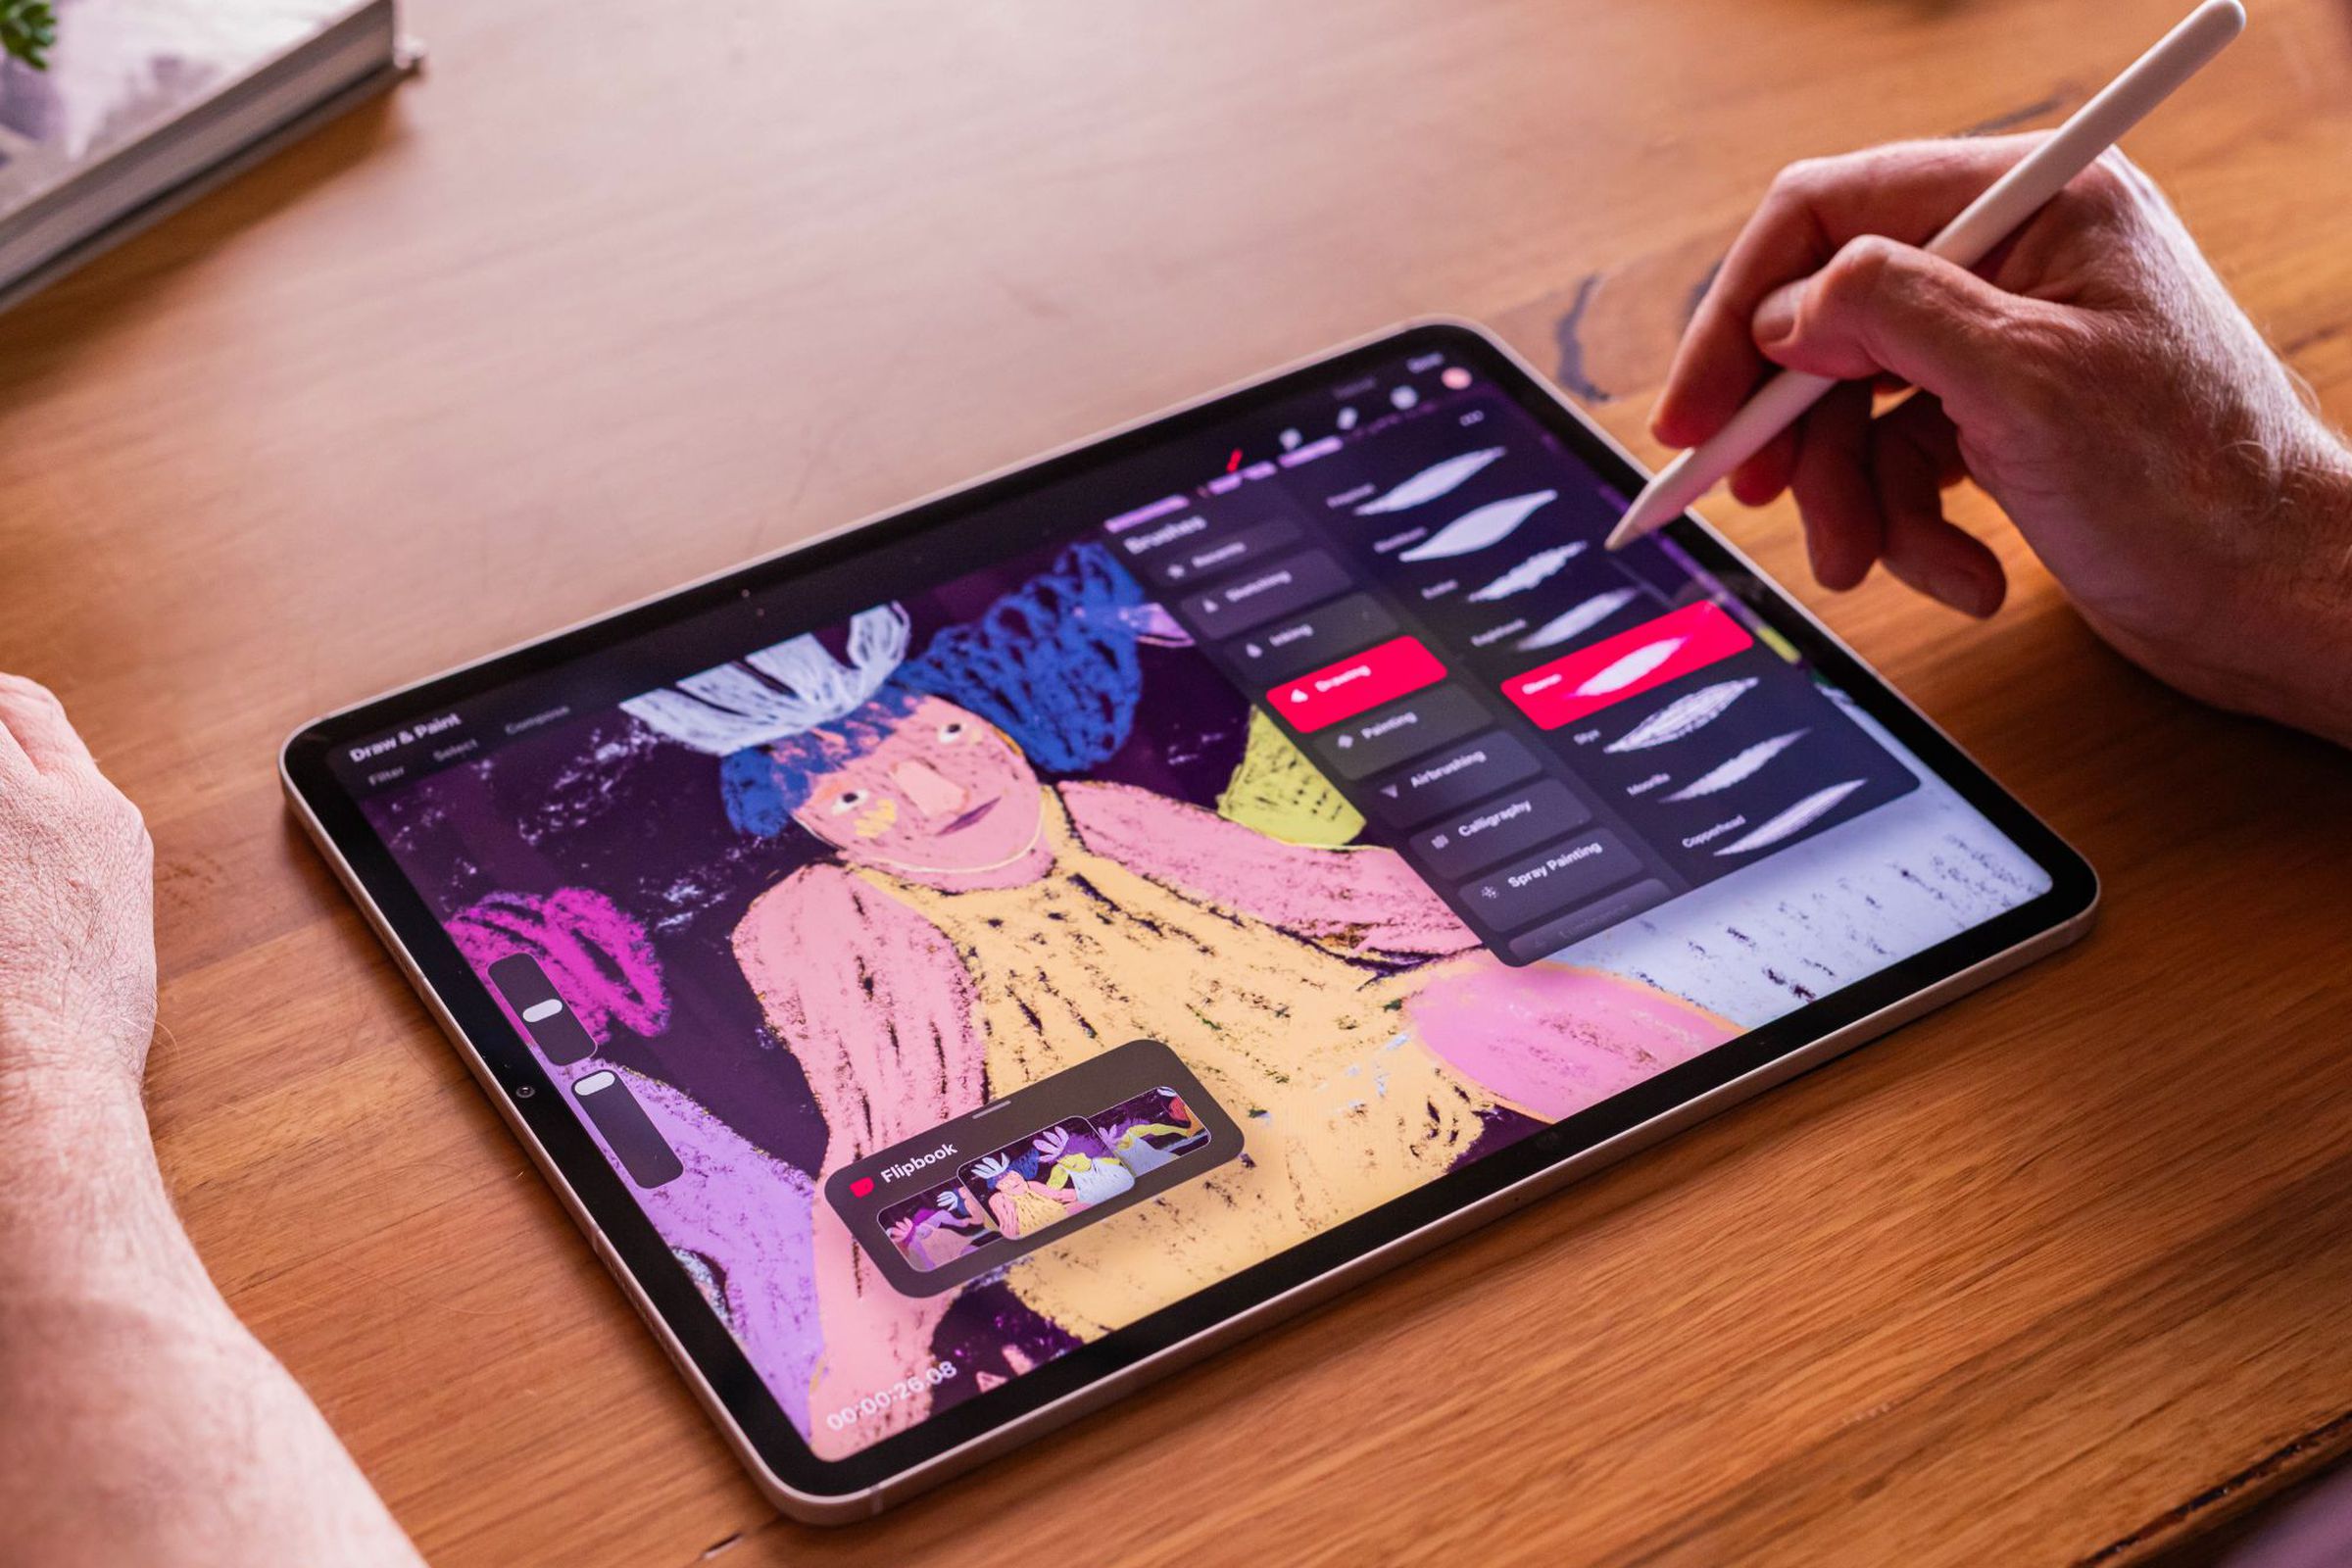 An iPad running the new Procreate Dreams animation app.